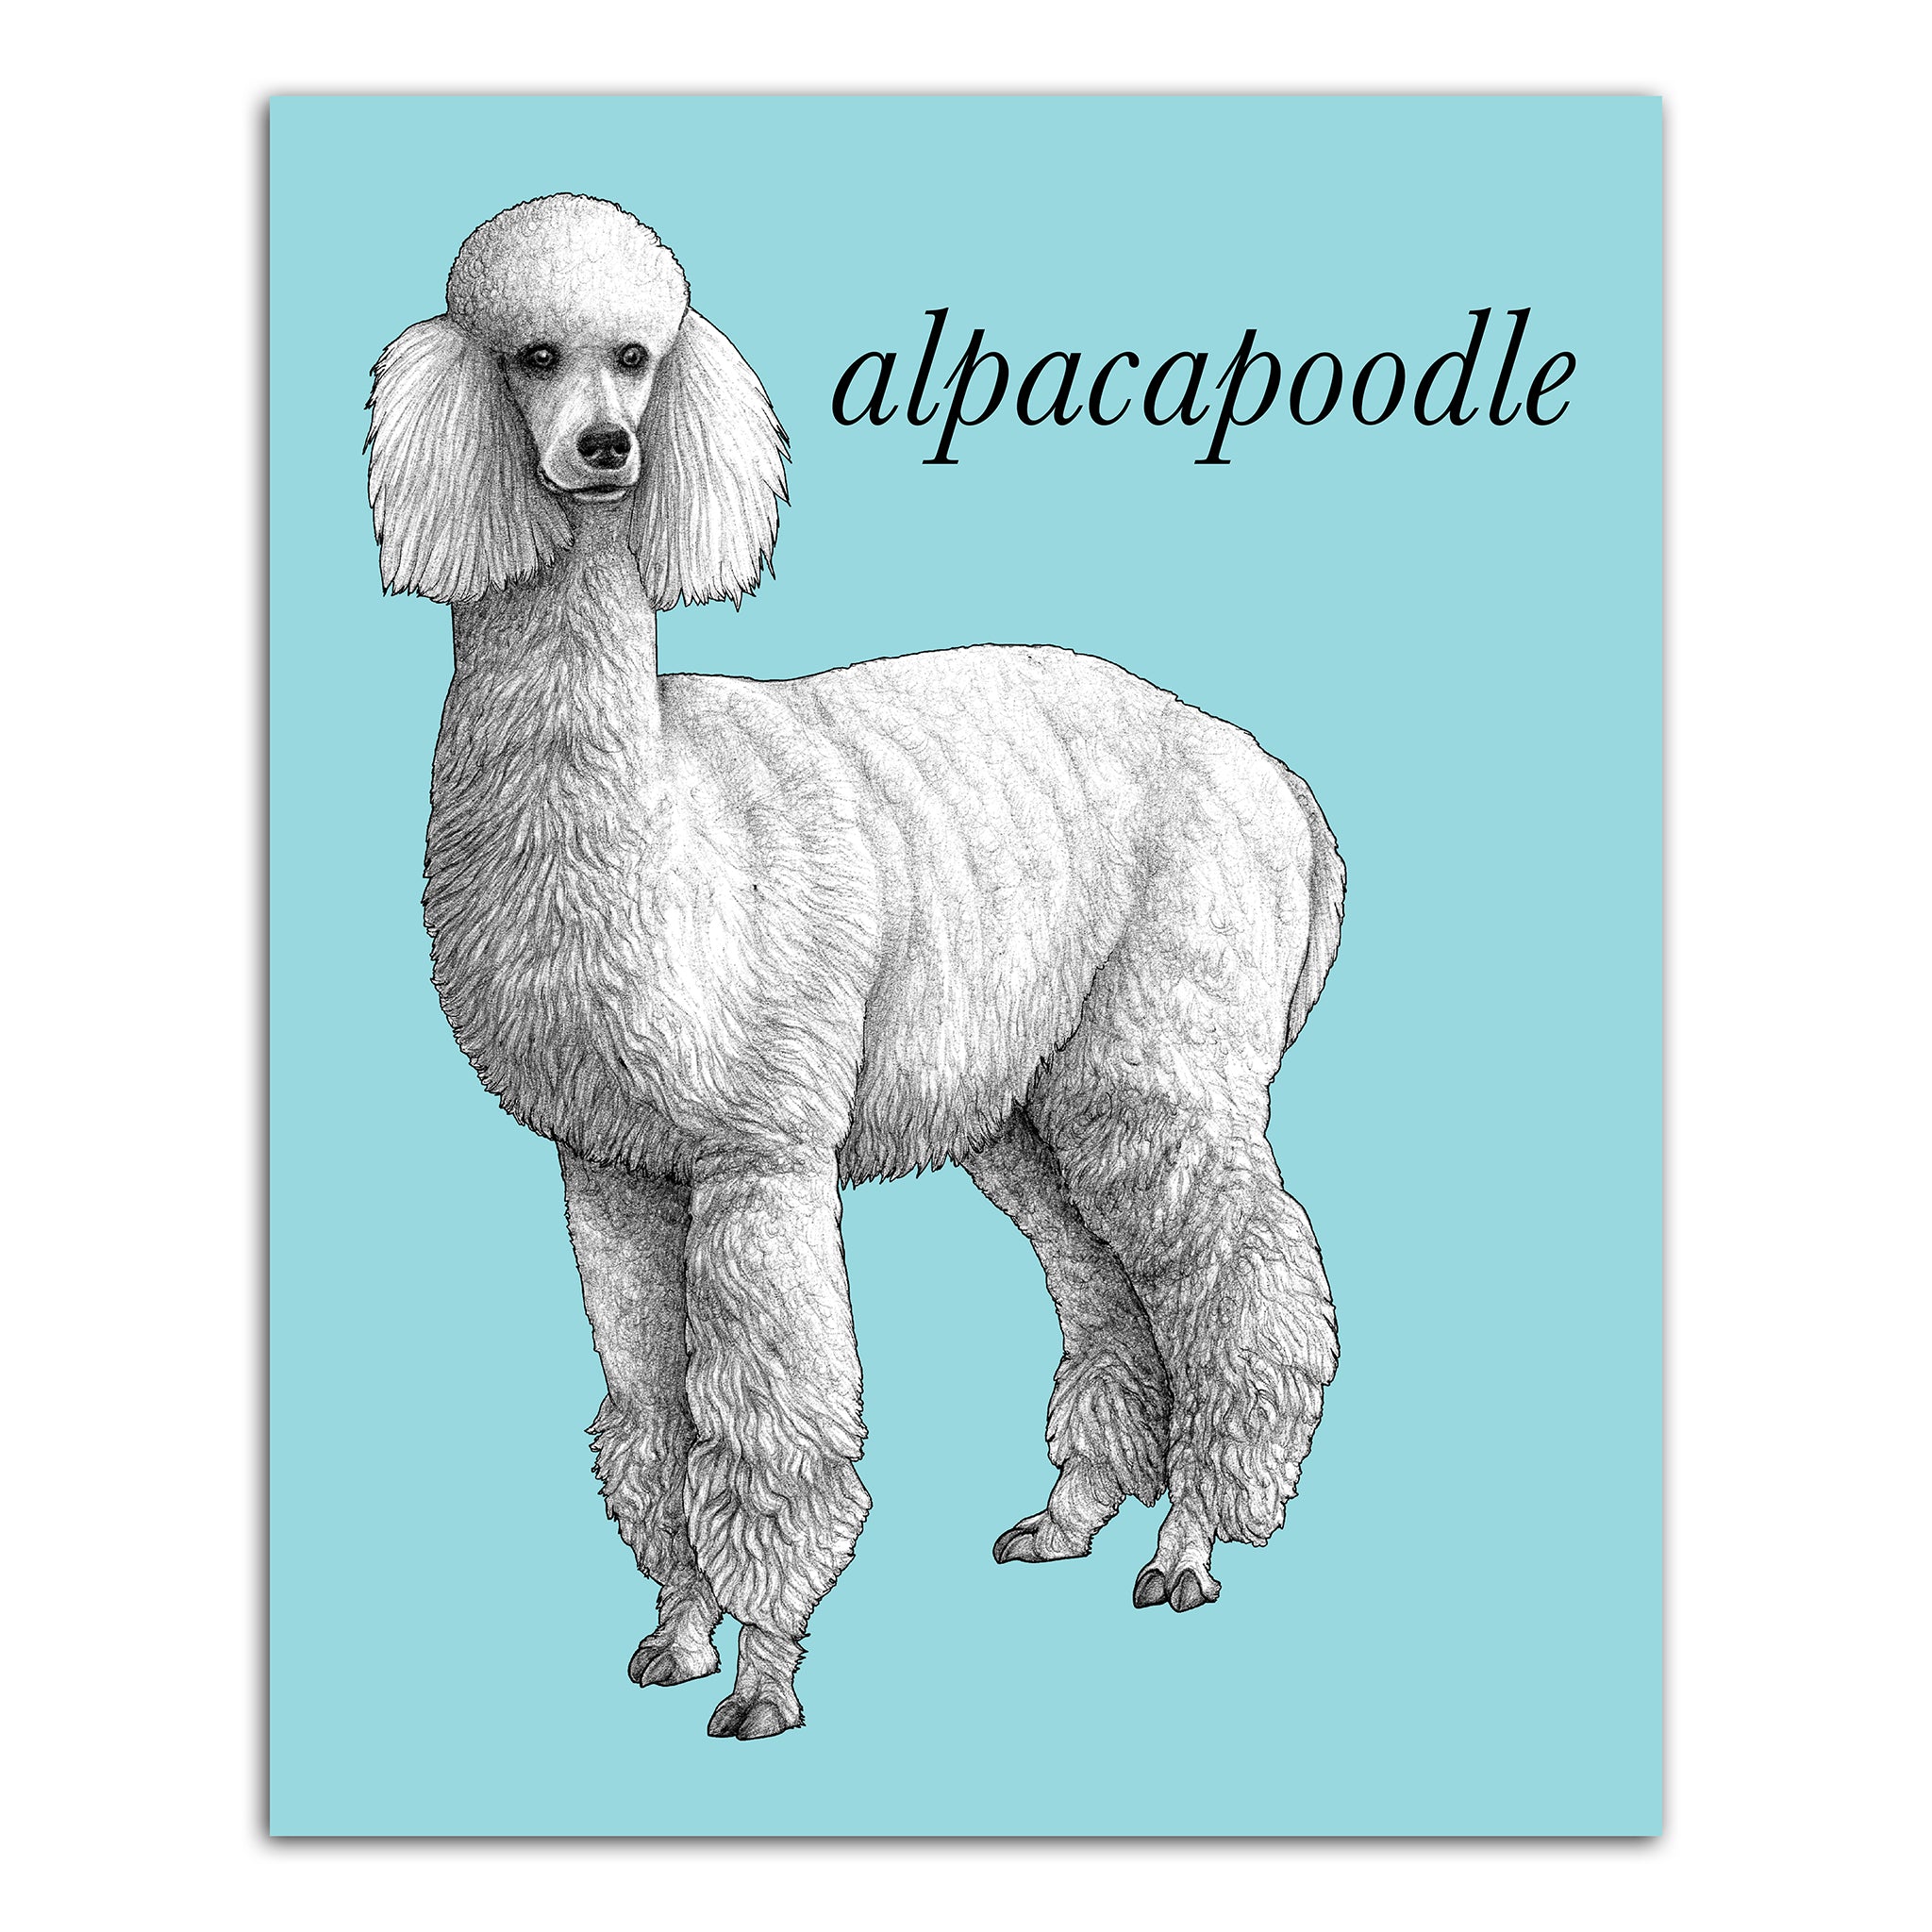 Alpacapoodle | Alpaca + Poodle Hybrid Animal | 8x10" Color Print